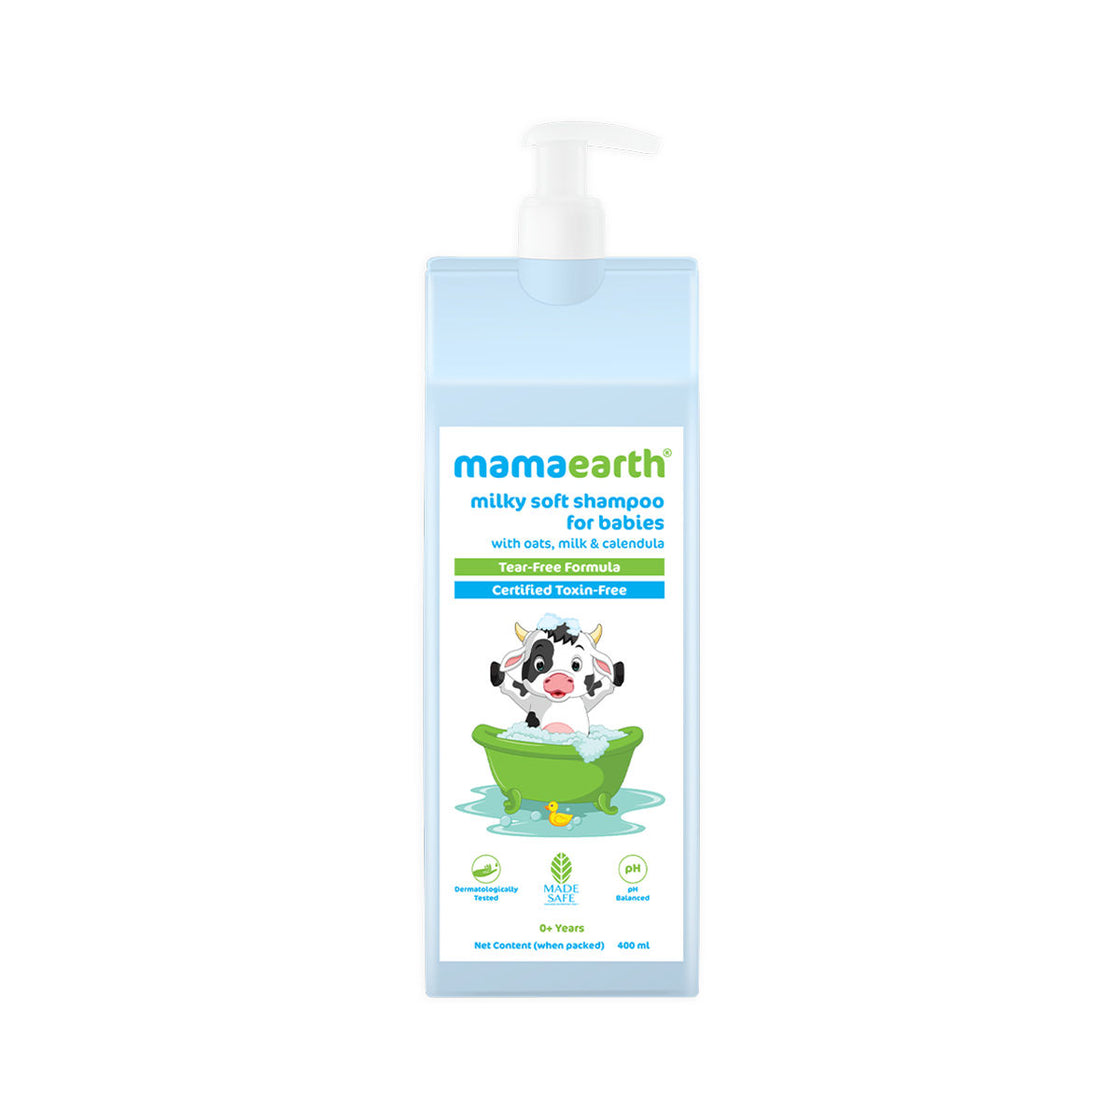 Mamaearth Milky Soft Shampoo With Oats, Milk And Calendula For Babies-7